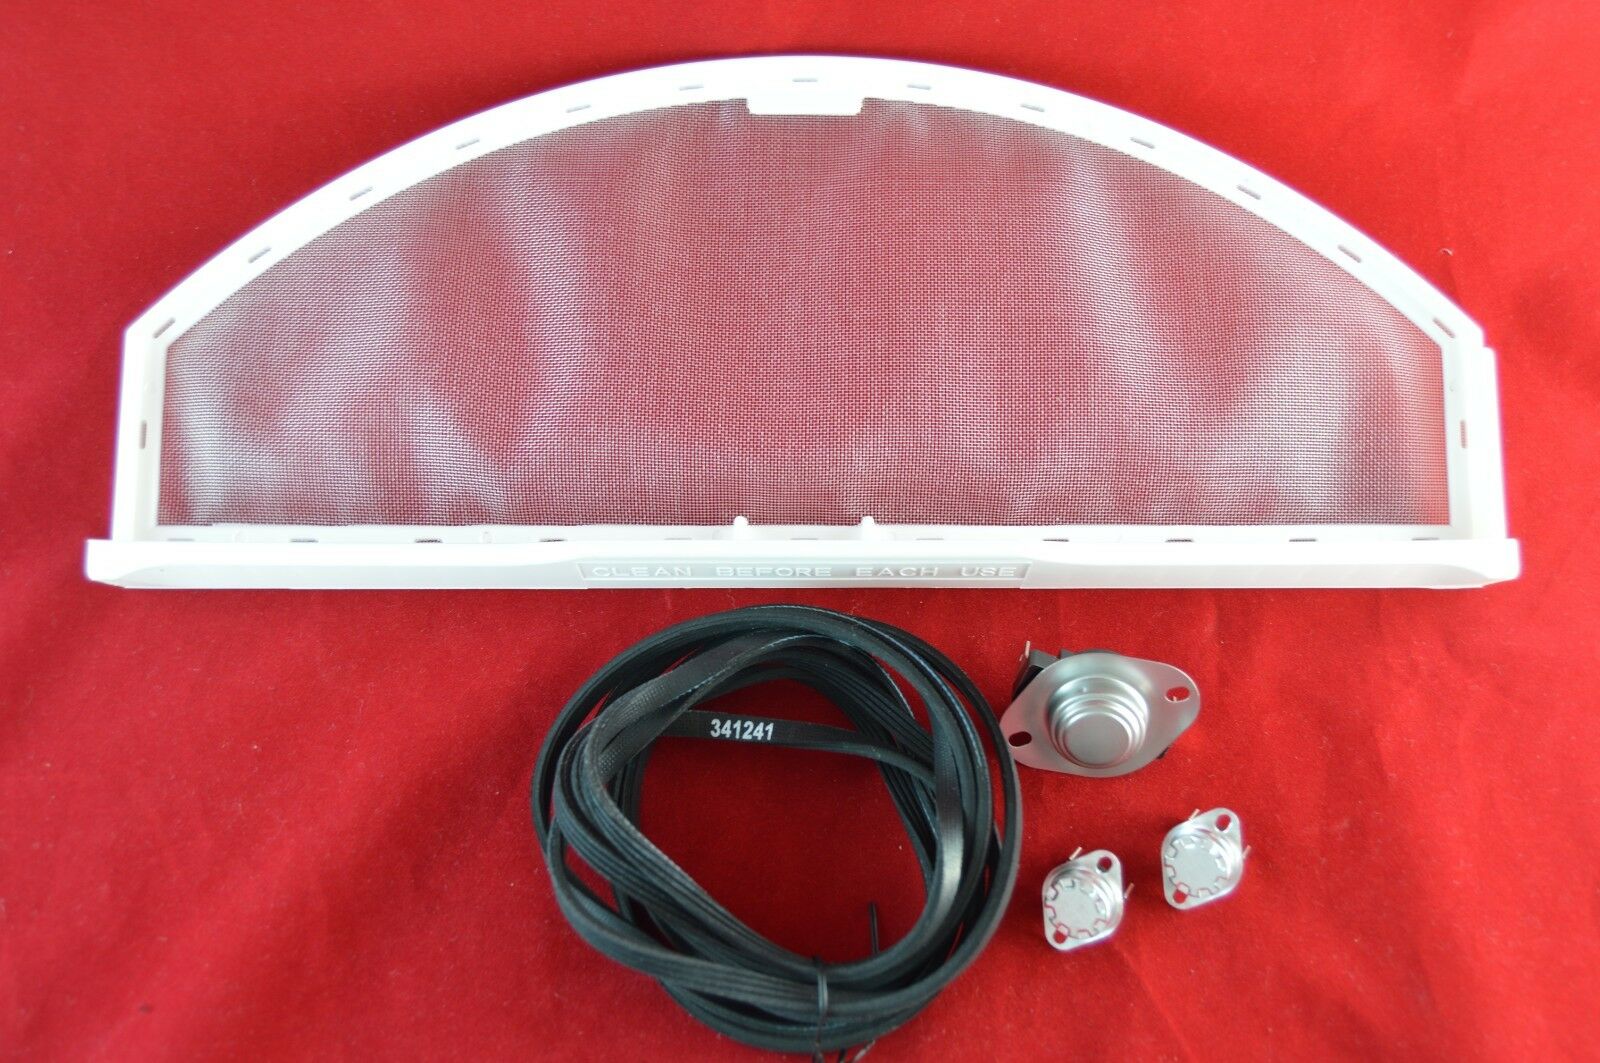 scaroo LA-1053 WP53-0918 341241 Thermostat Fuse Belt Lint Screen Maytag Dryer Kit New